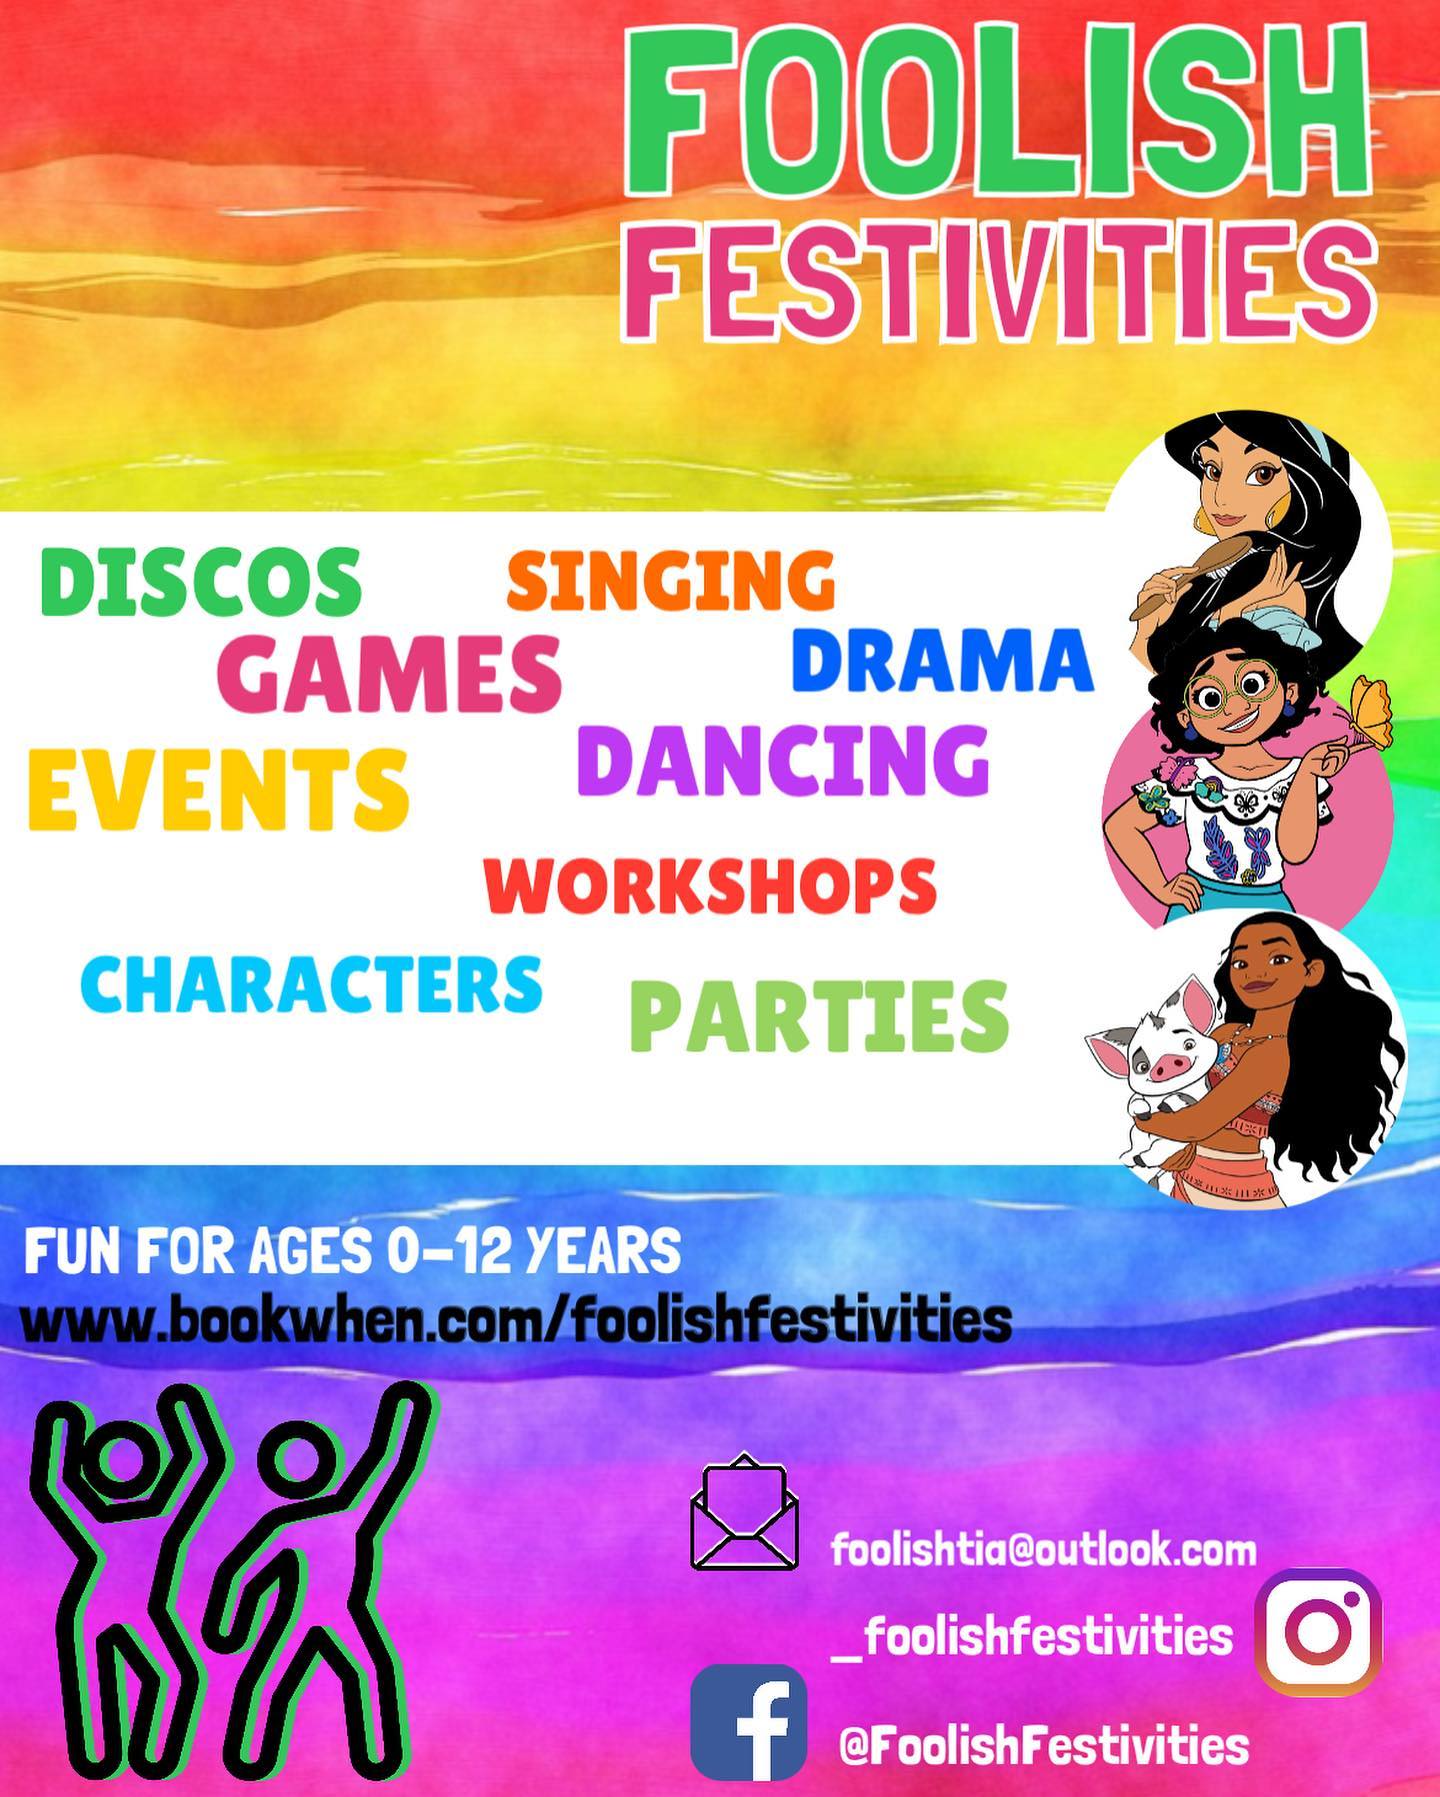 Foolish Festivities's logo